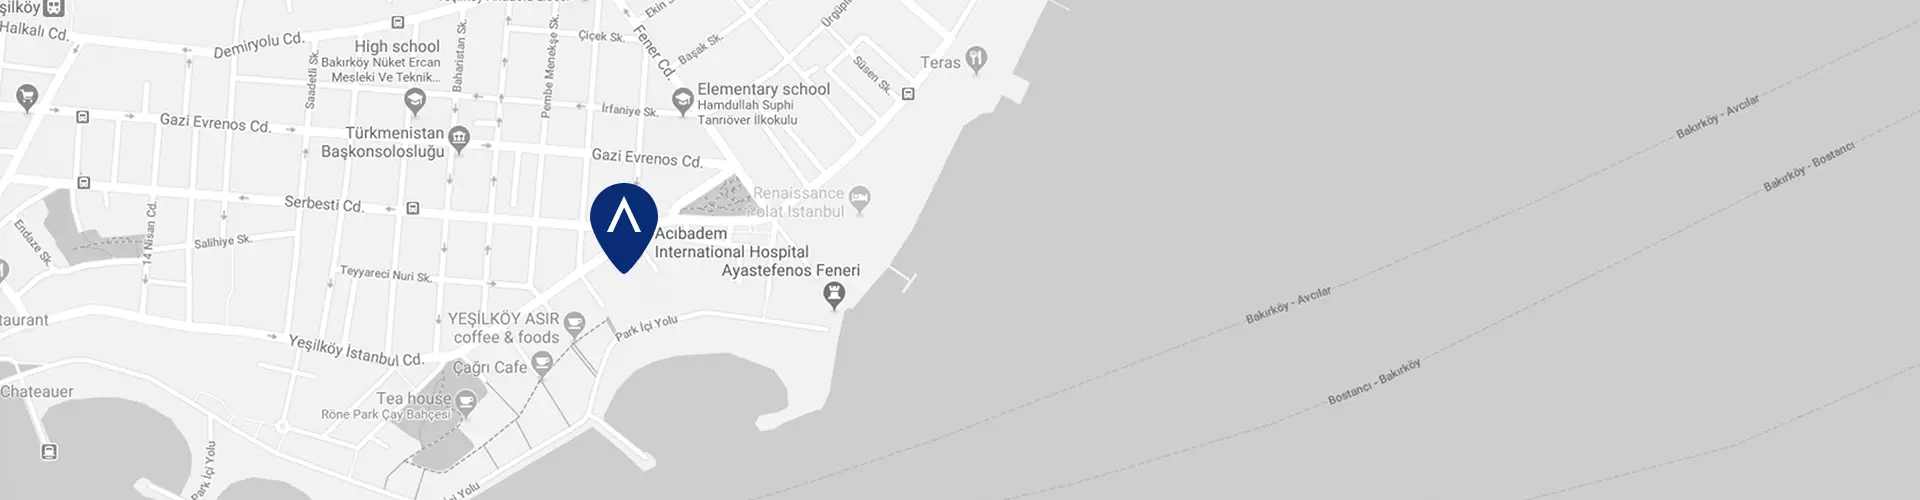 acibadem-international-hastanesi-google-maps-image.webp